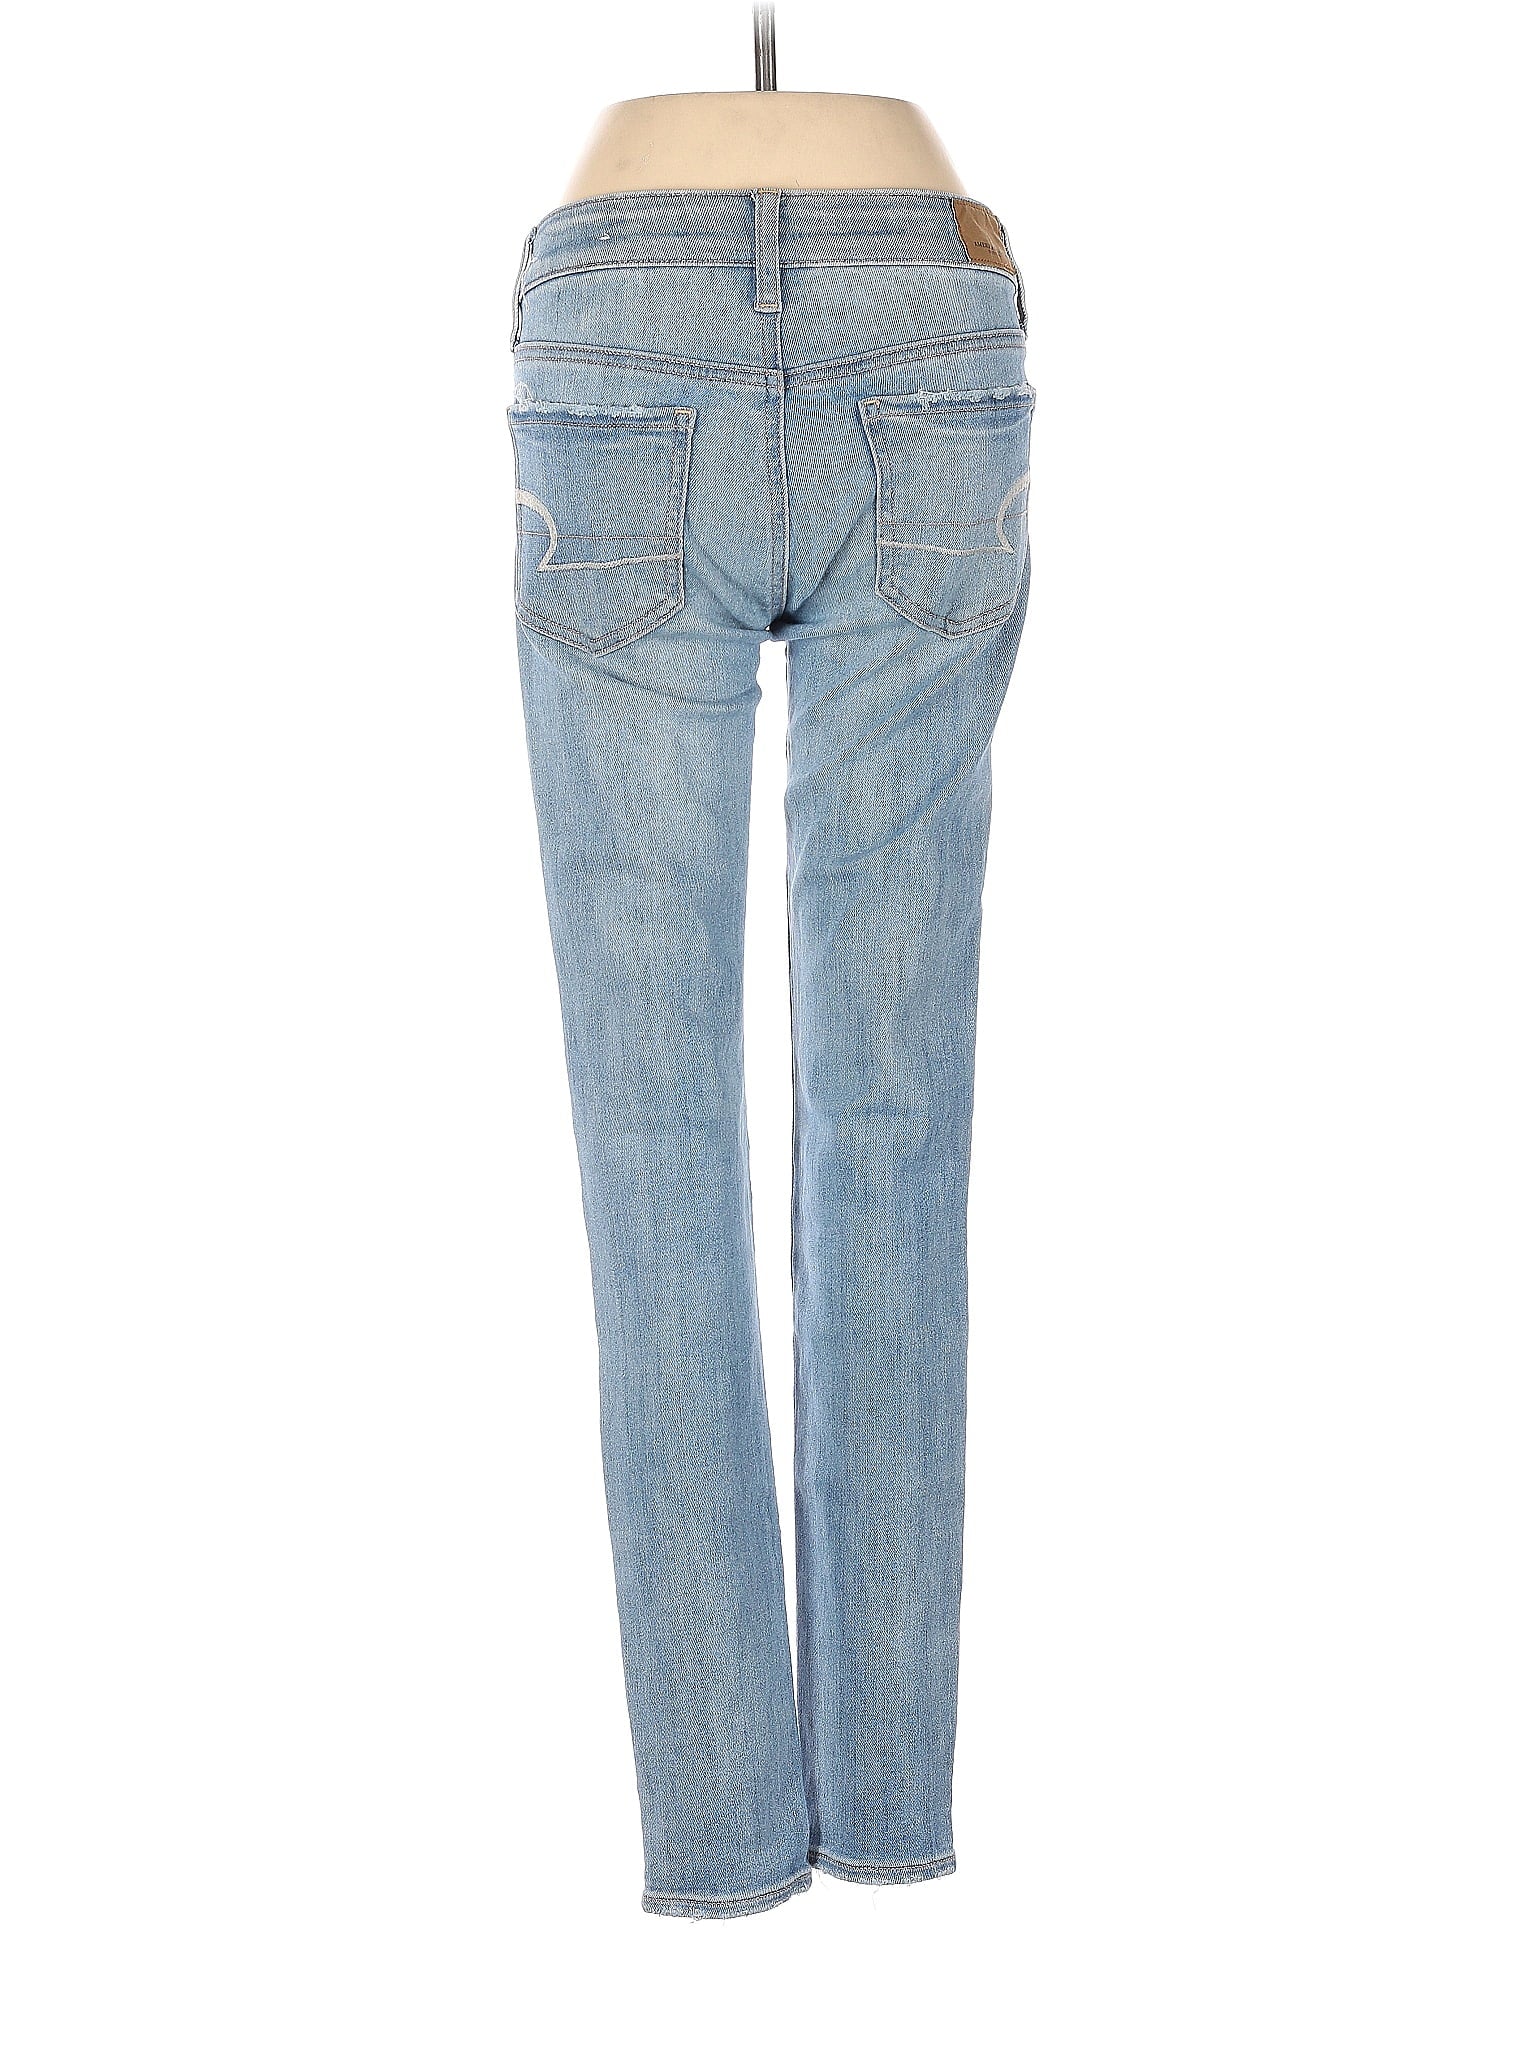 Jeans size - 00